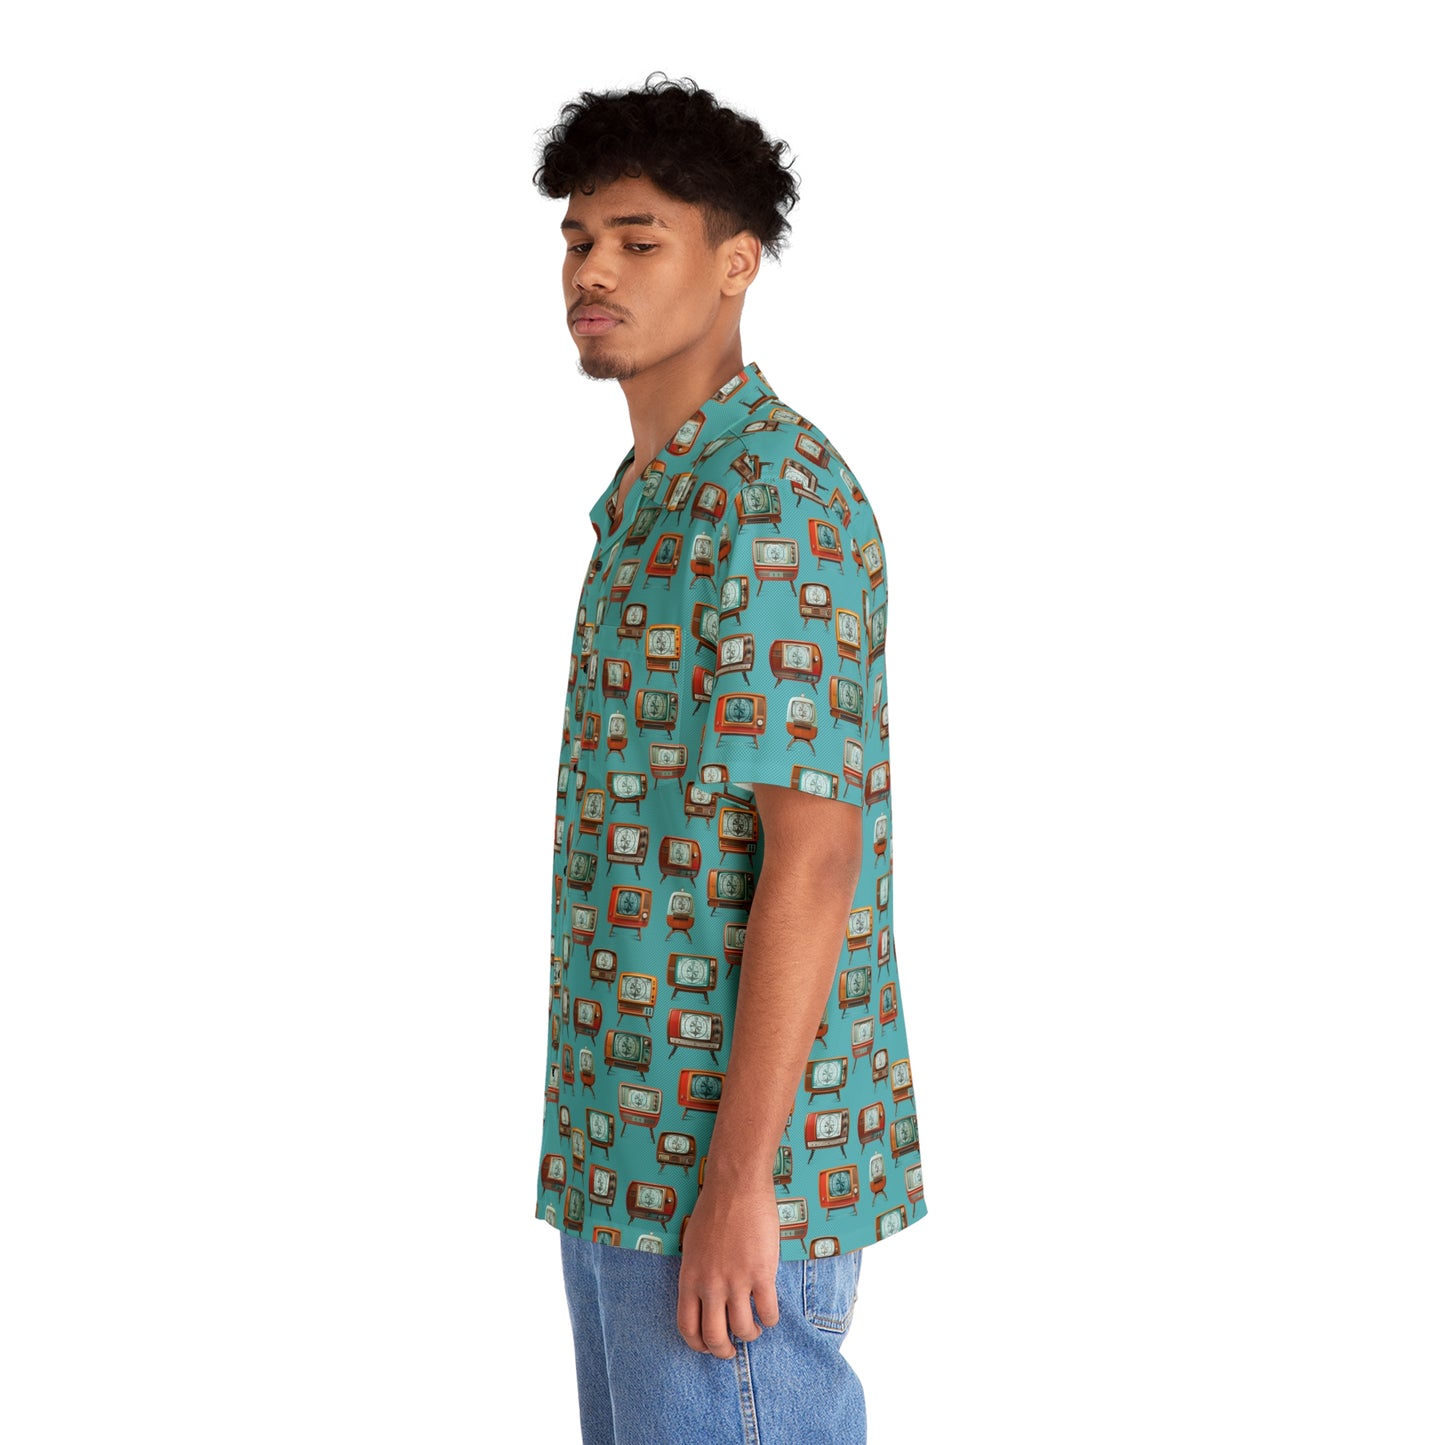 Retro TVs Aqua Aloha Shirt by Studio Ten Design